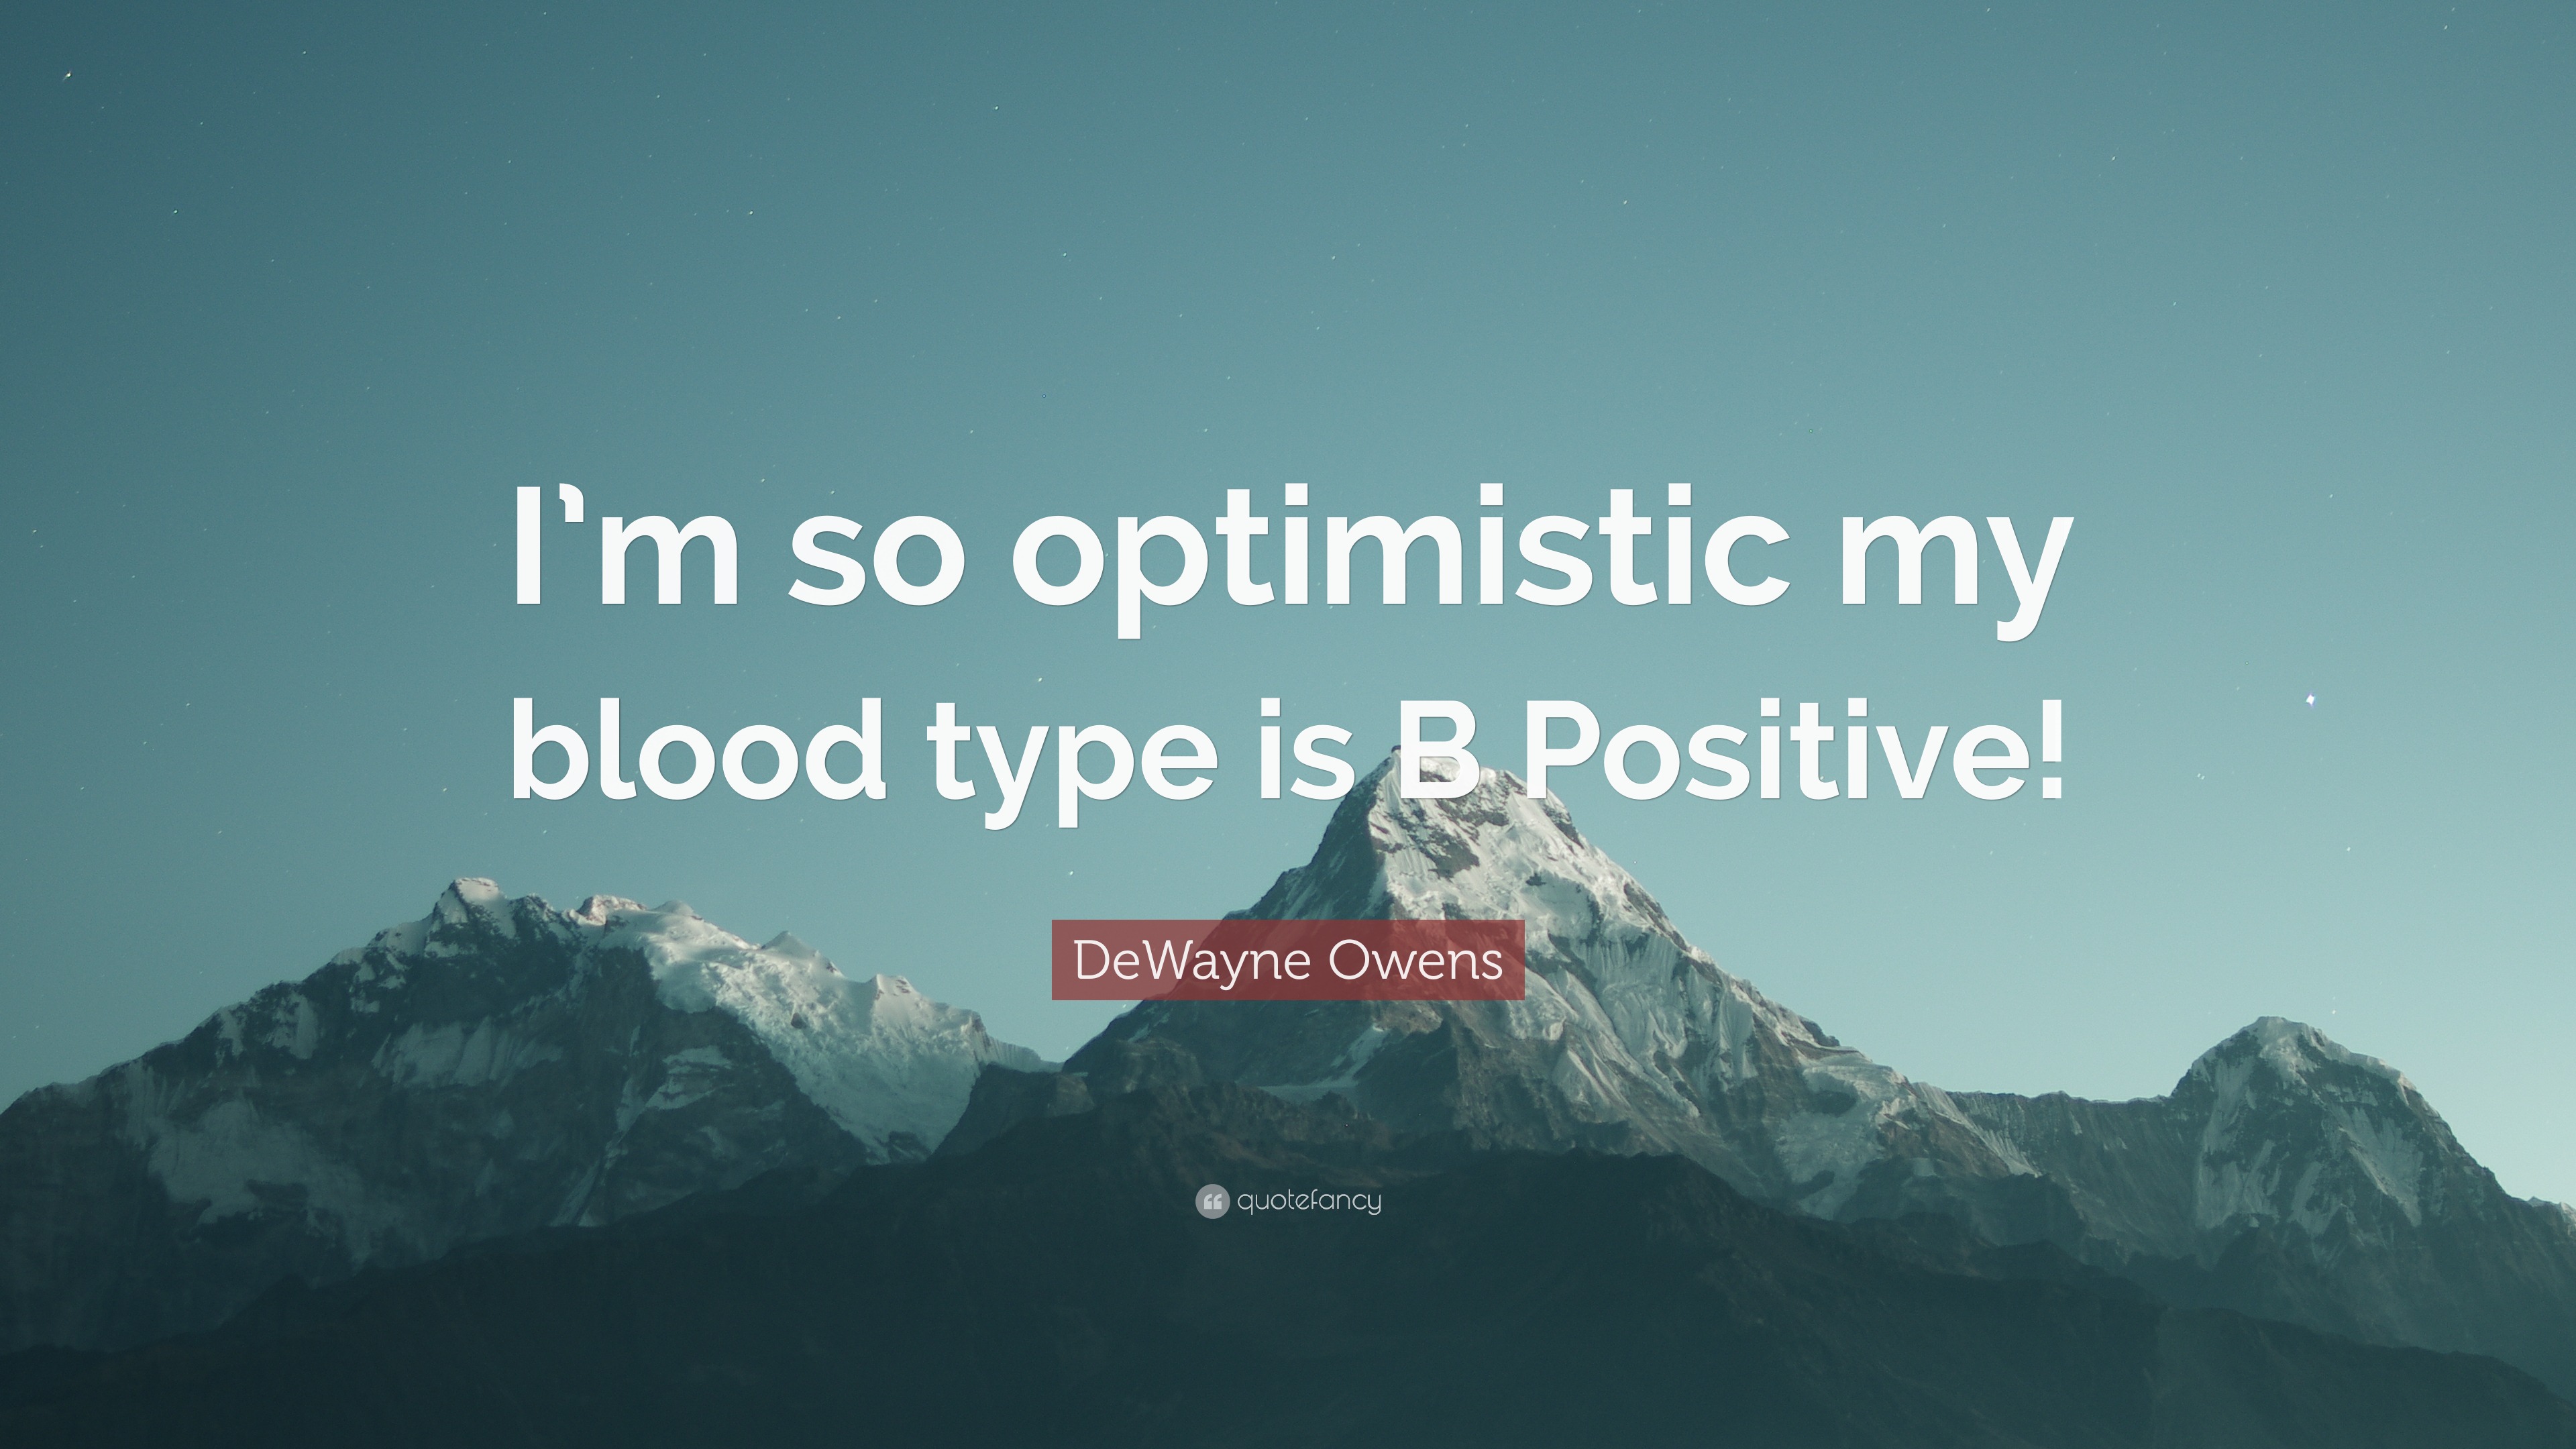 https://quotefancy.com/media/wallpaper/3840x2160/7012968-DeWayne-Owens-Quote-I-m-so-optimistic-my-blood-type-is-B-Positive.jpg